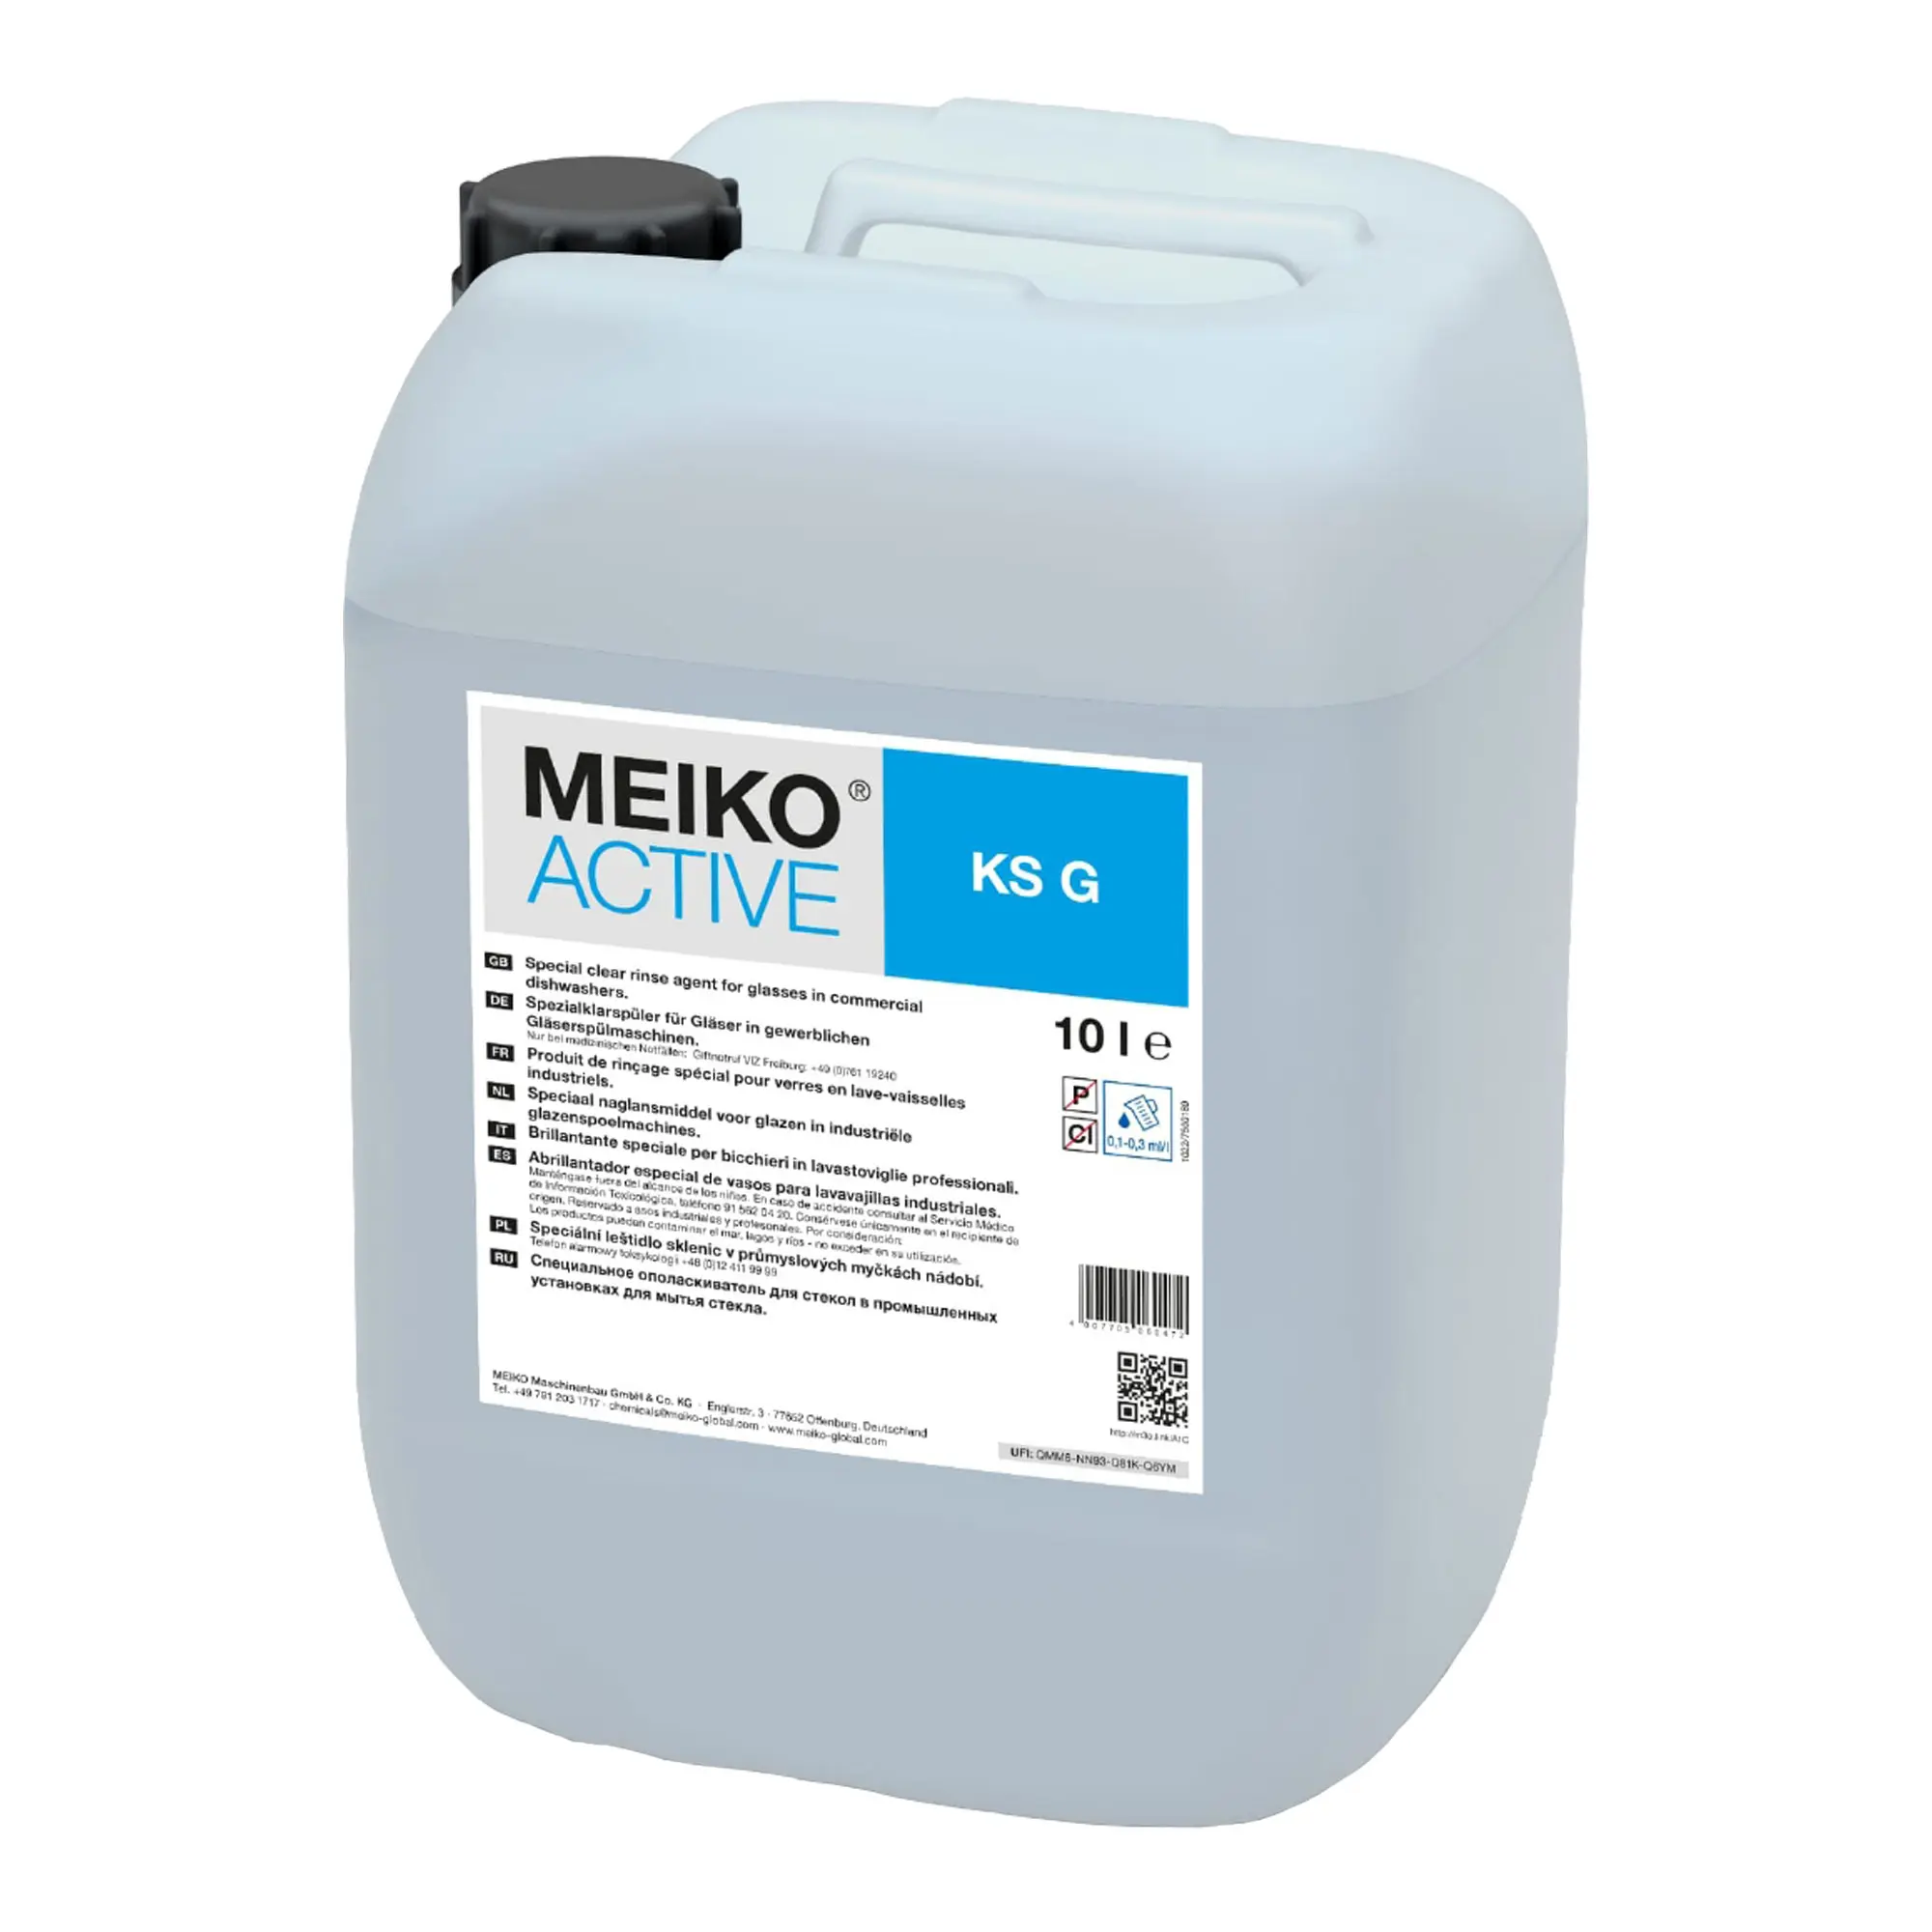 Meiko Active KS G Spezial-Klarspüler für Gläser